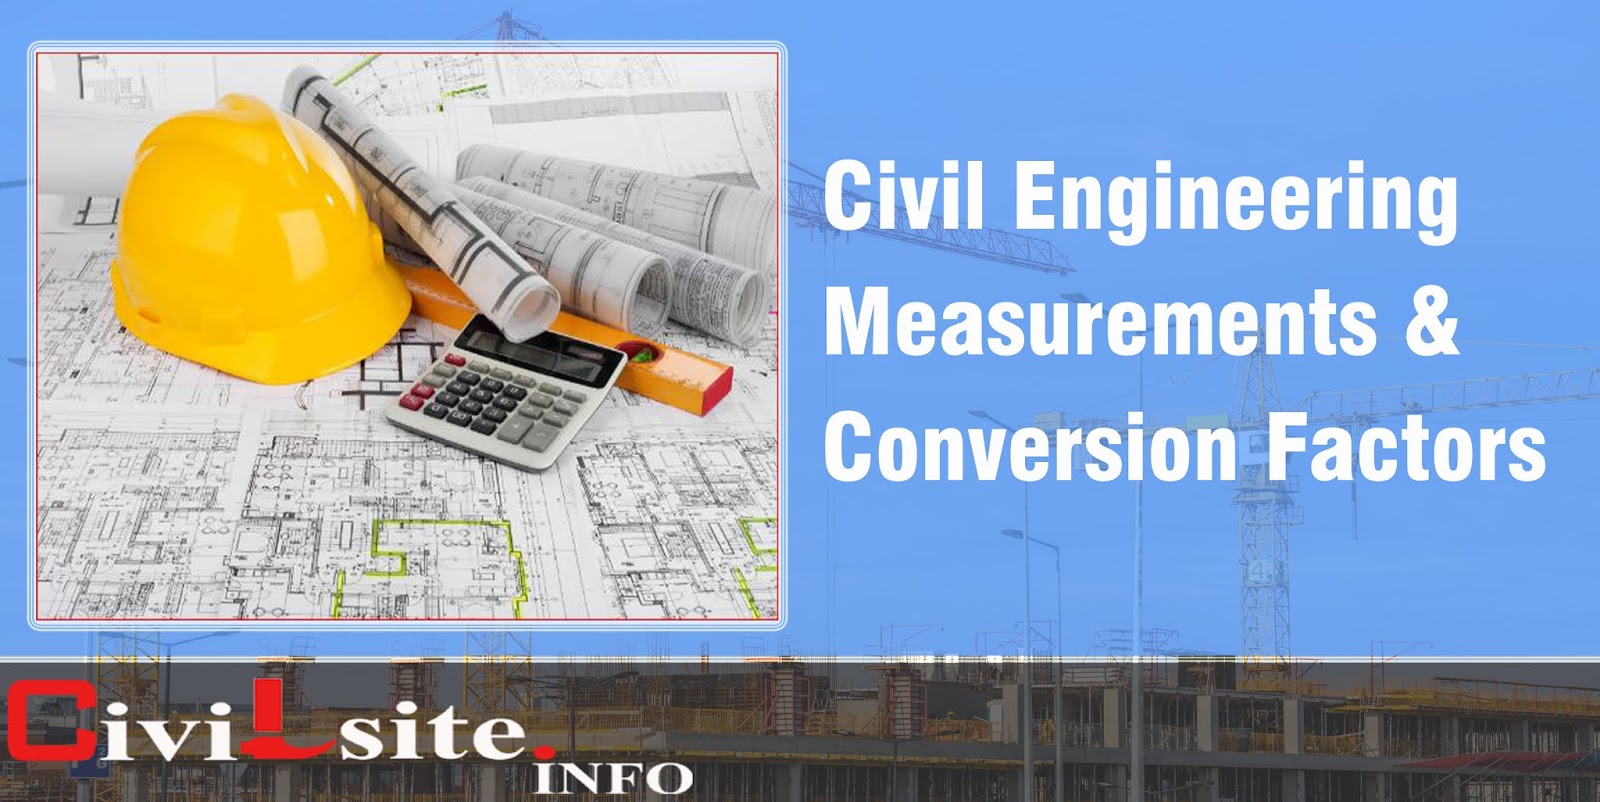 Civil Engineering Measurements & Conversion Factors